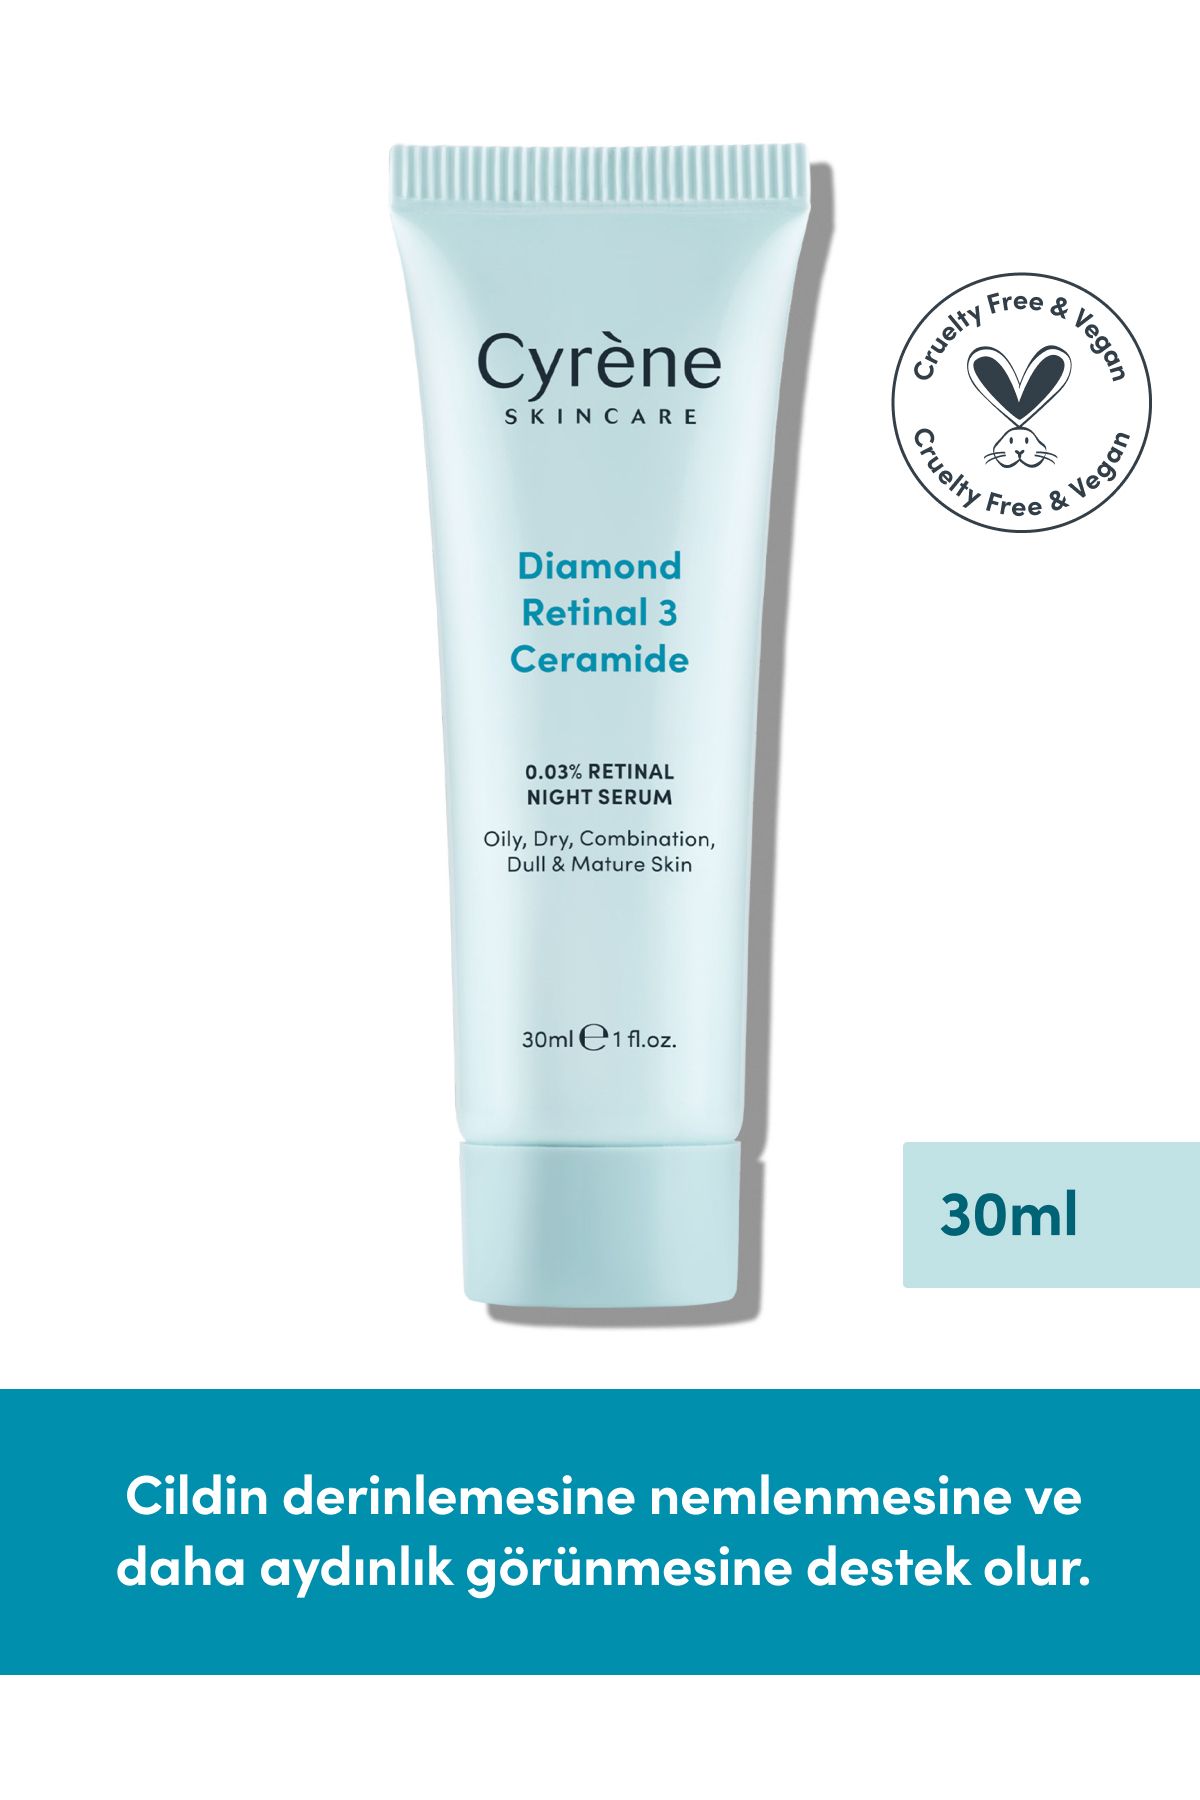 Cyrene Diamond Retinal 3 Ceramide